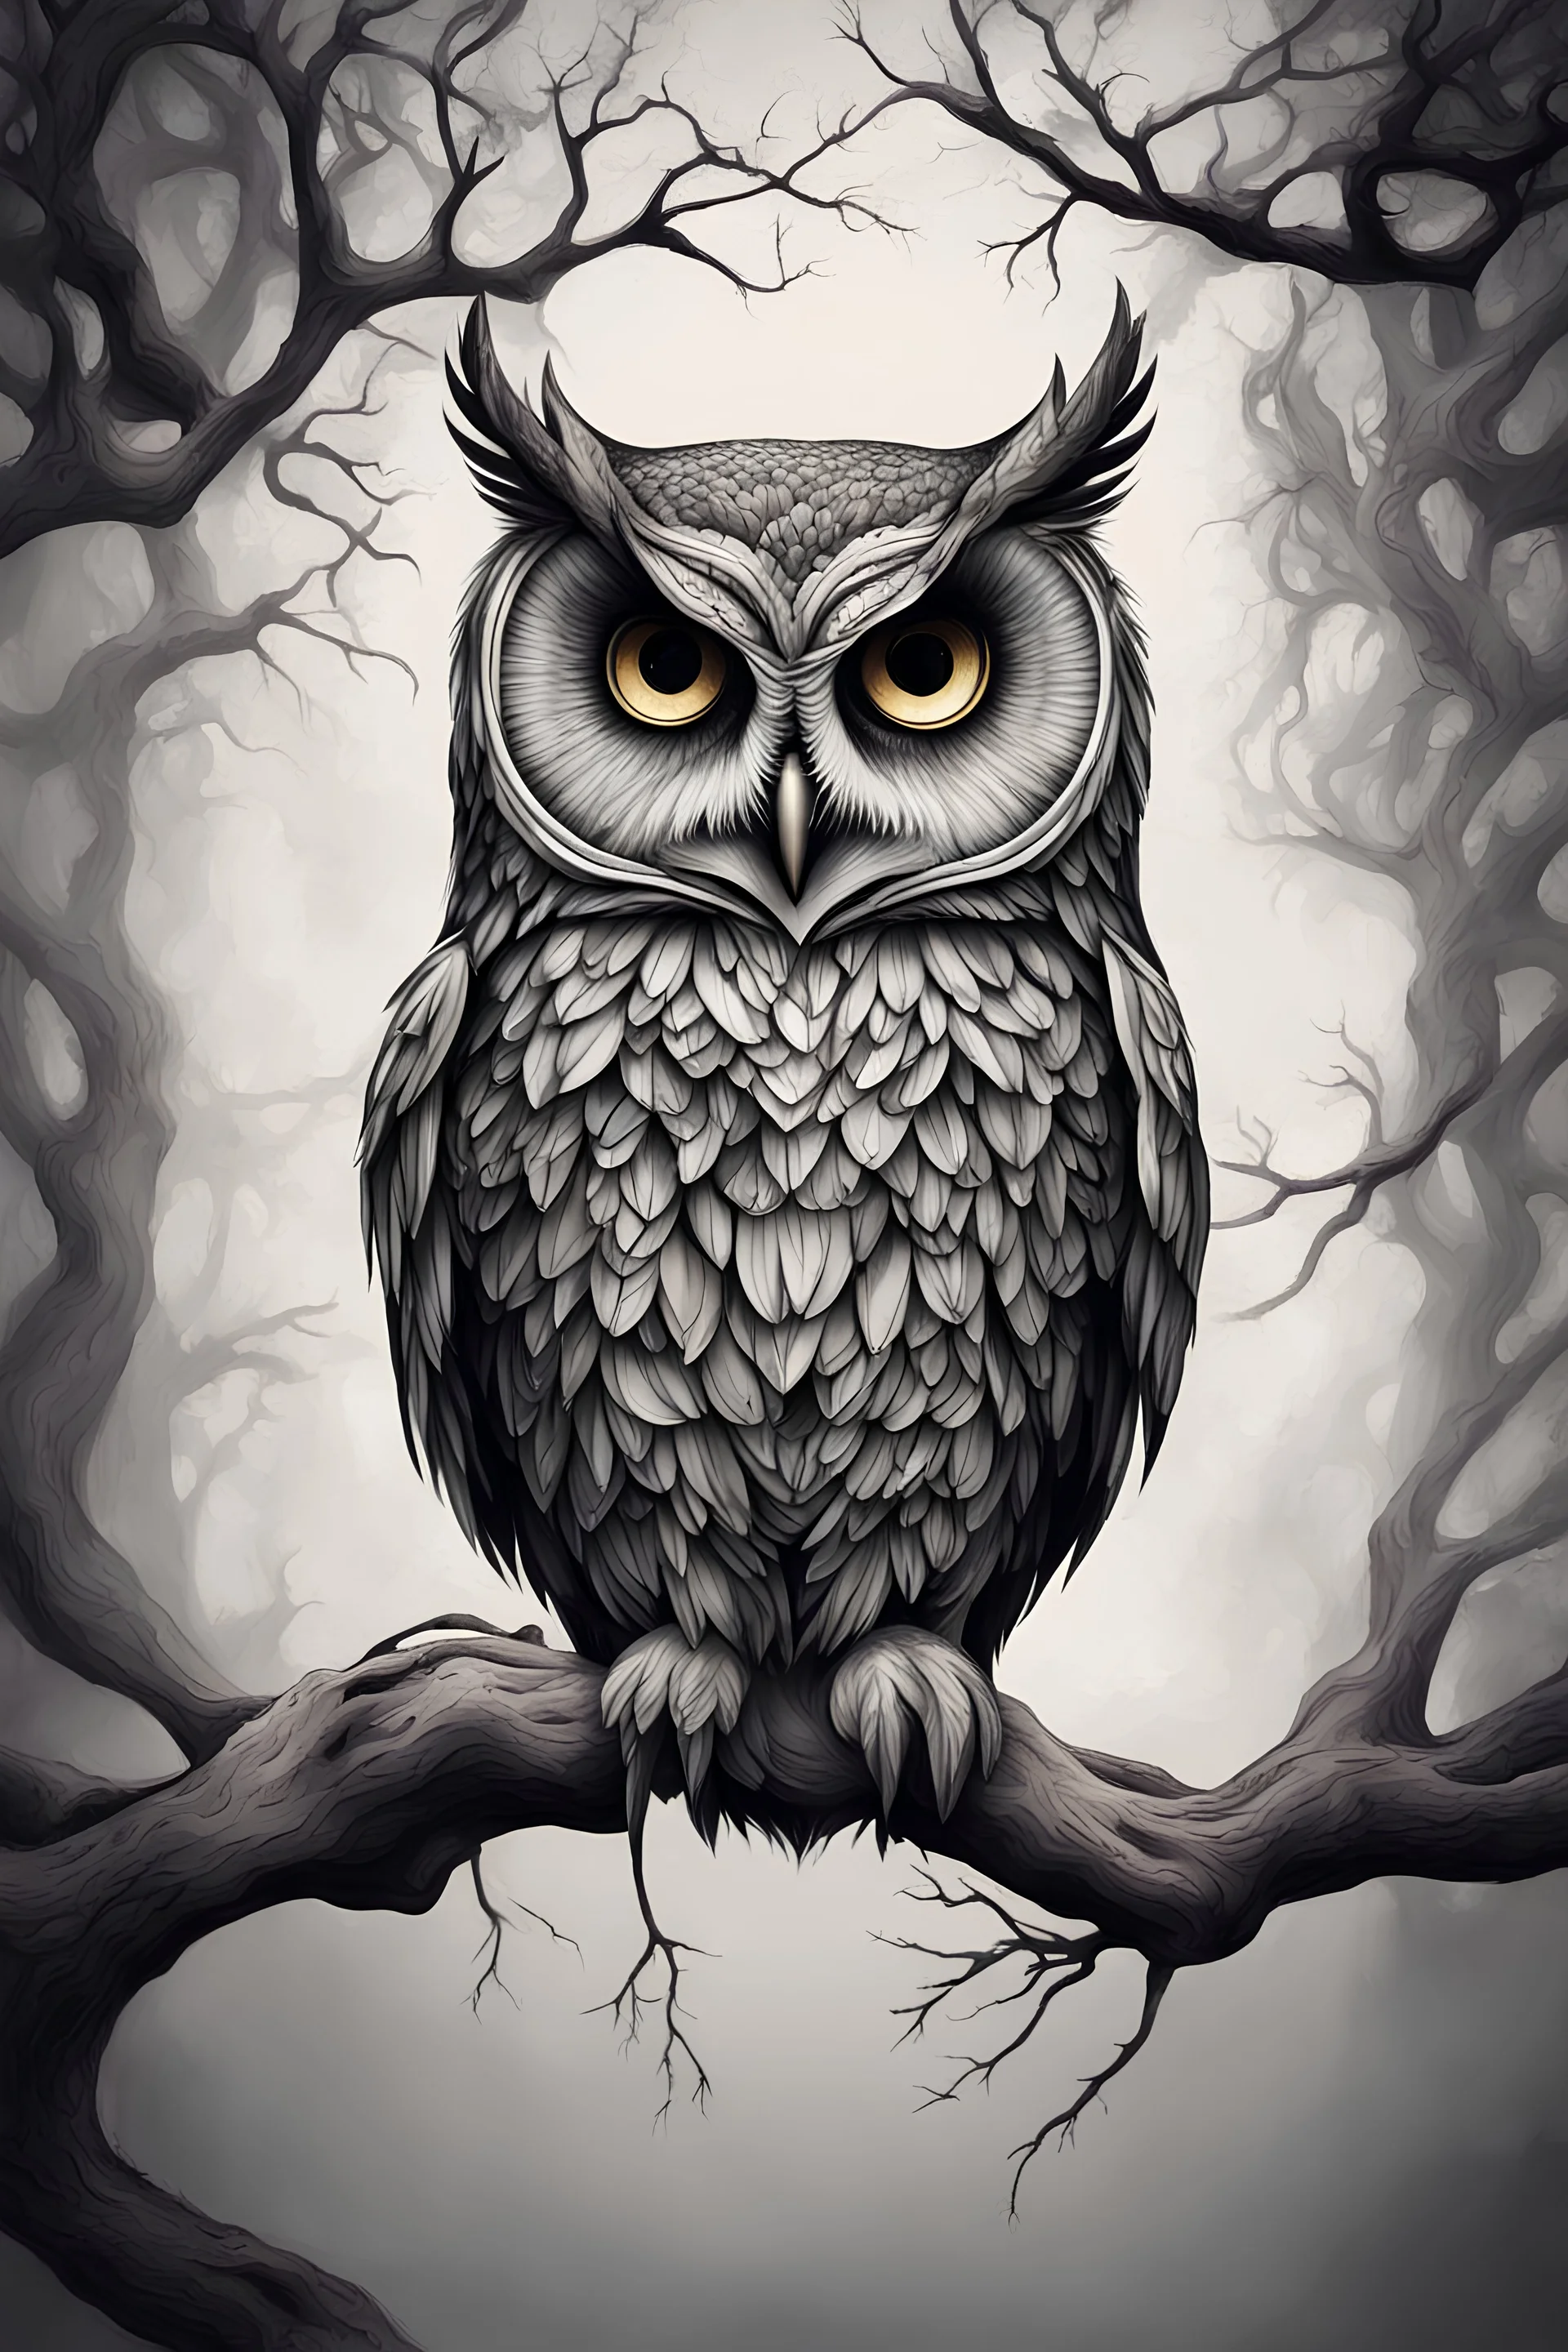 American traditional owl. Steel & Inc. St louis Missouri. : r/tattoos